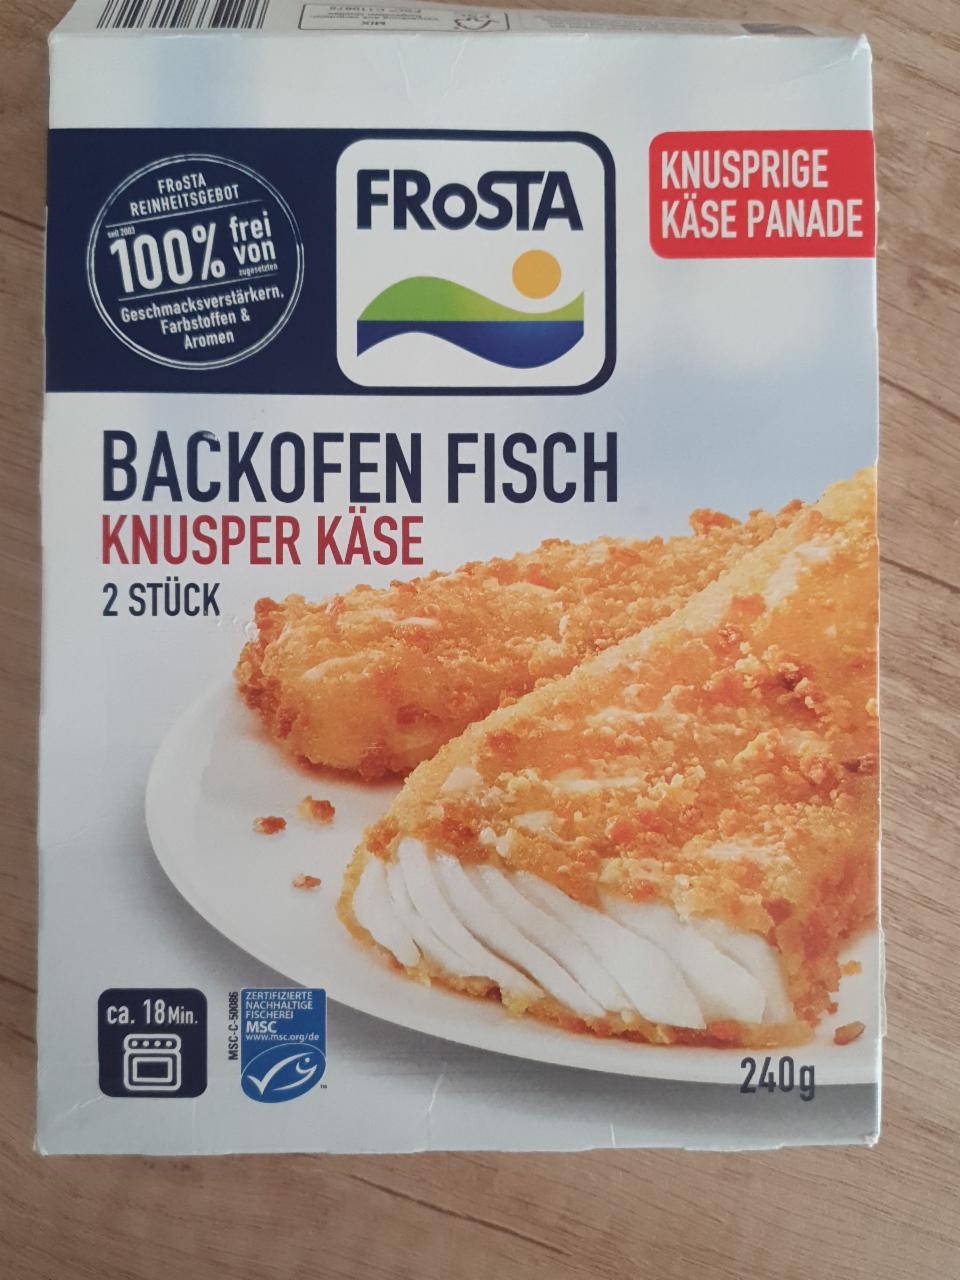 Fotografie - Backofen Fisch Knusper Käse FRoSTA